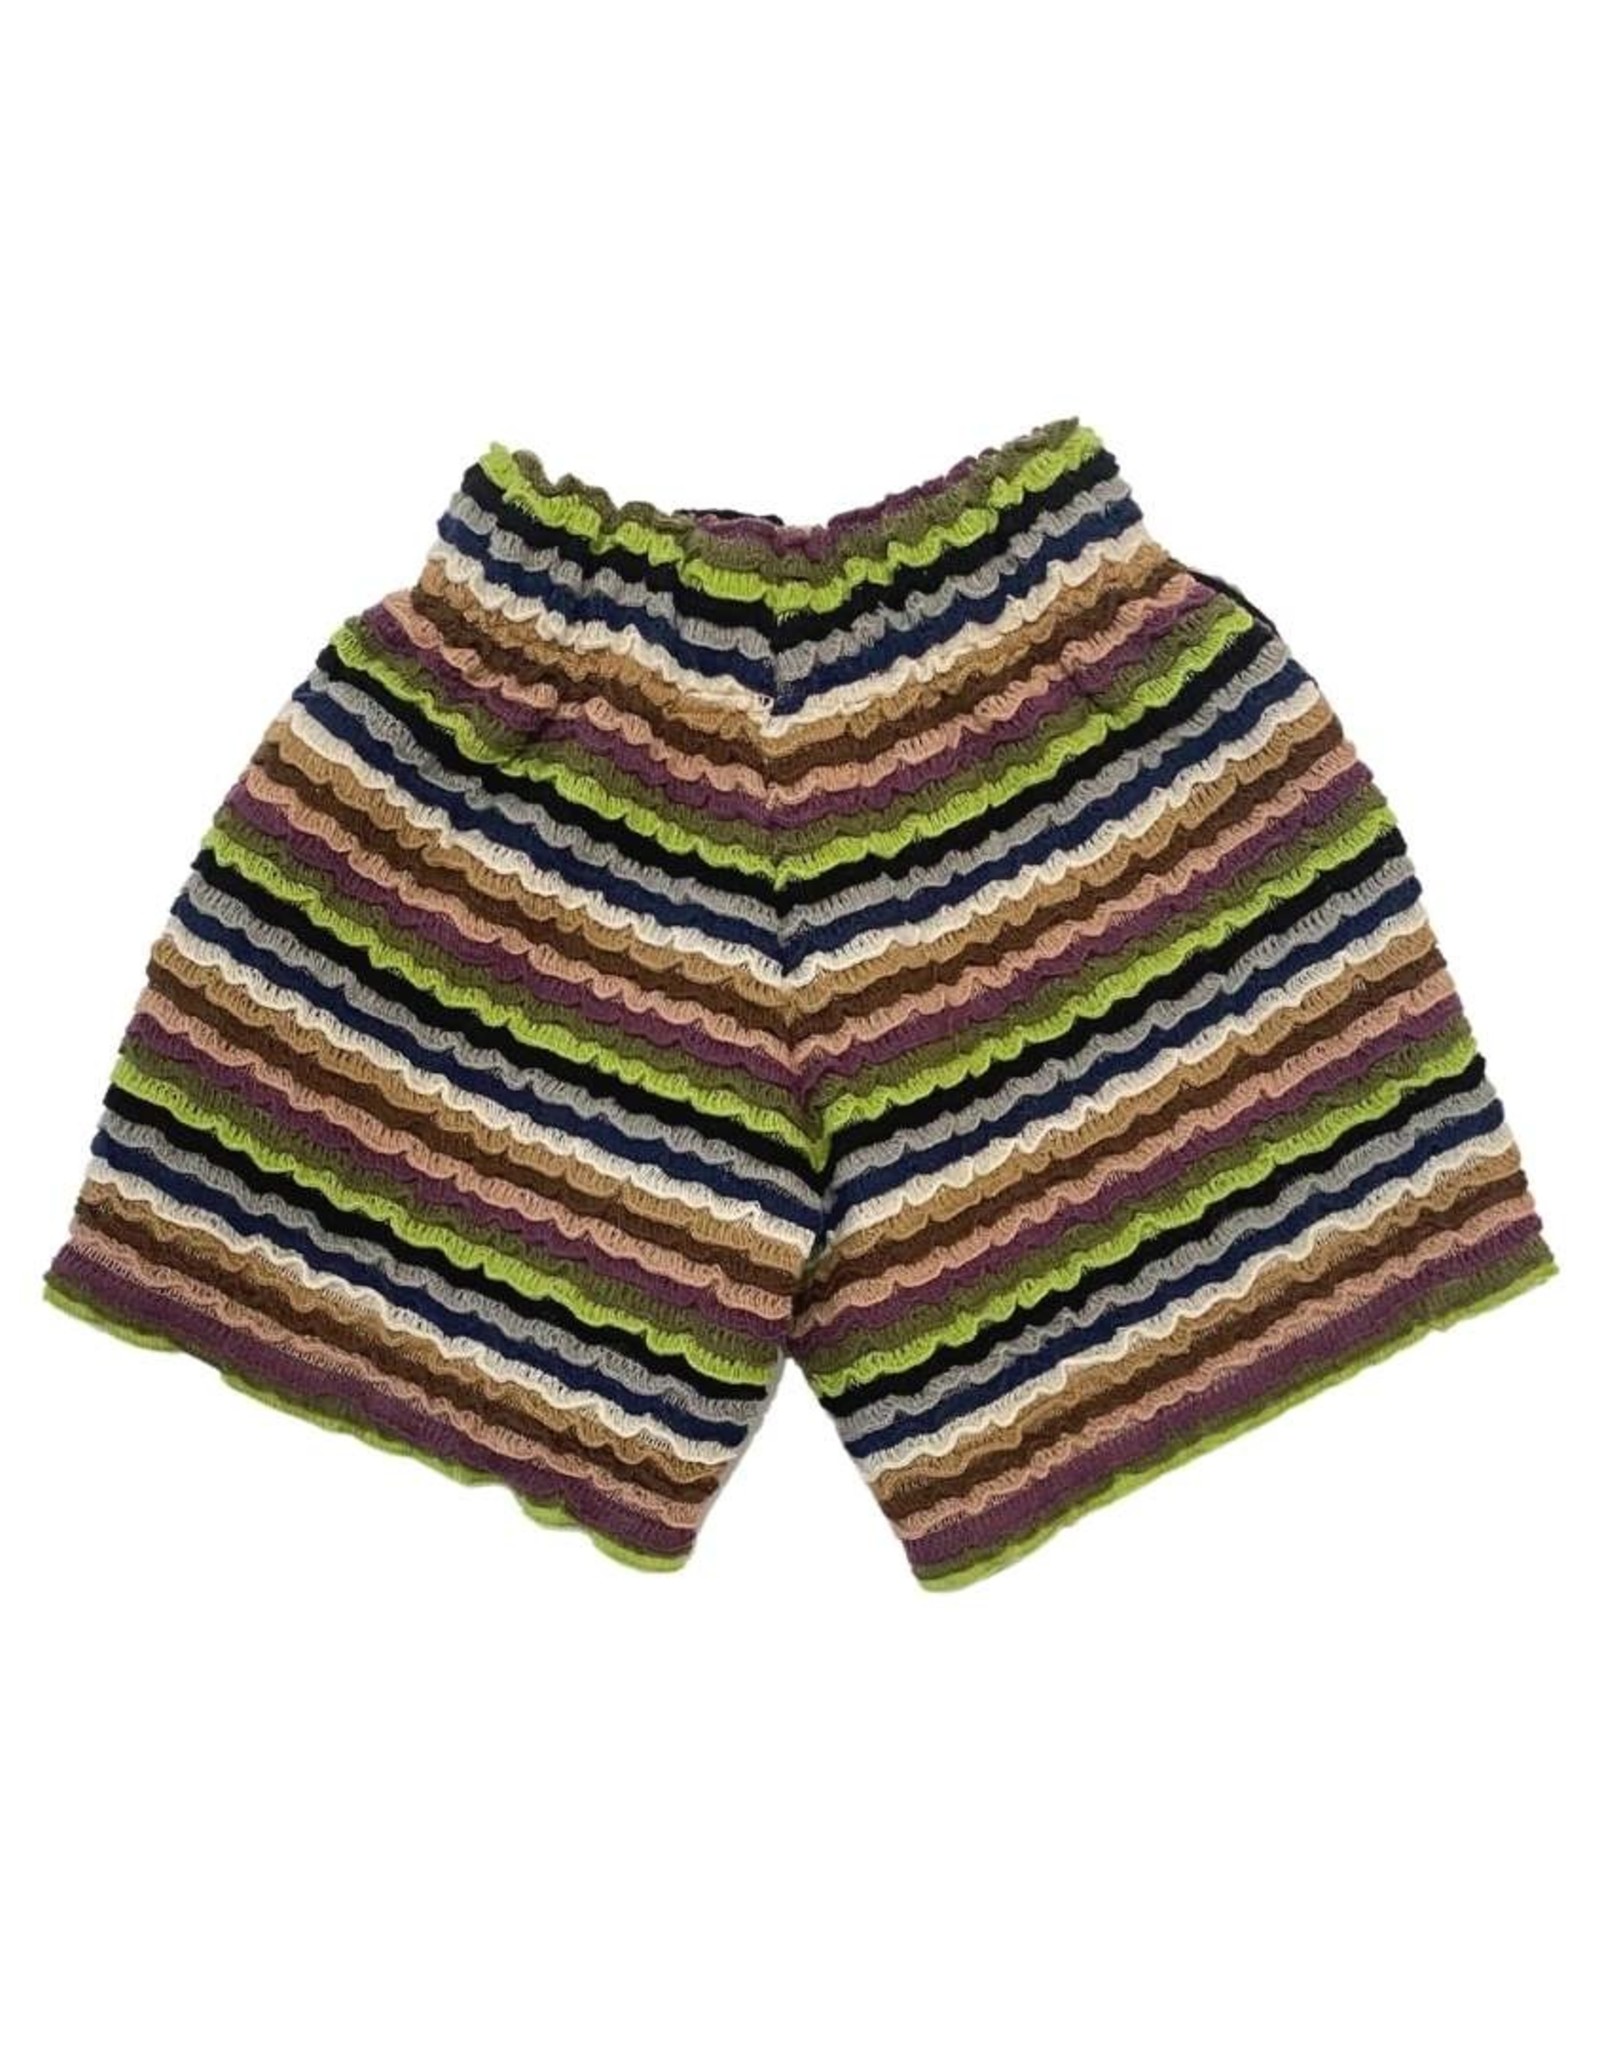 Cos I Said So SS23CRSH crochet shorts